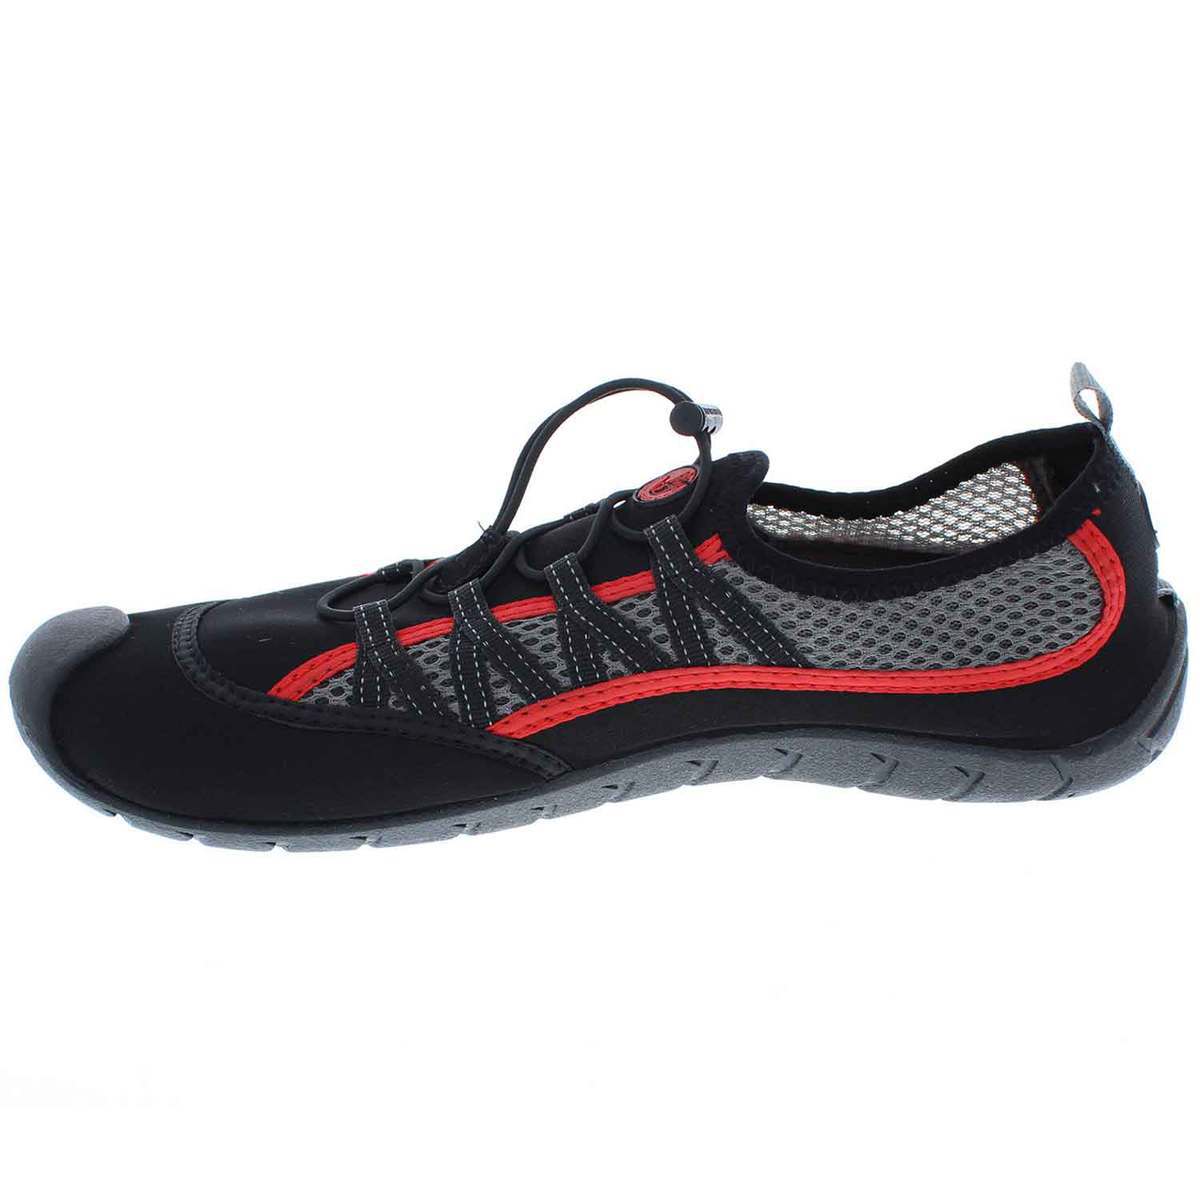 Body Glove Men's Sidewinder Water Shoes - Black/Infrared - Size 11 ...